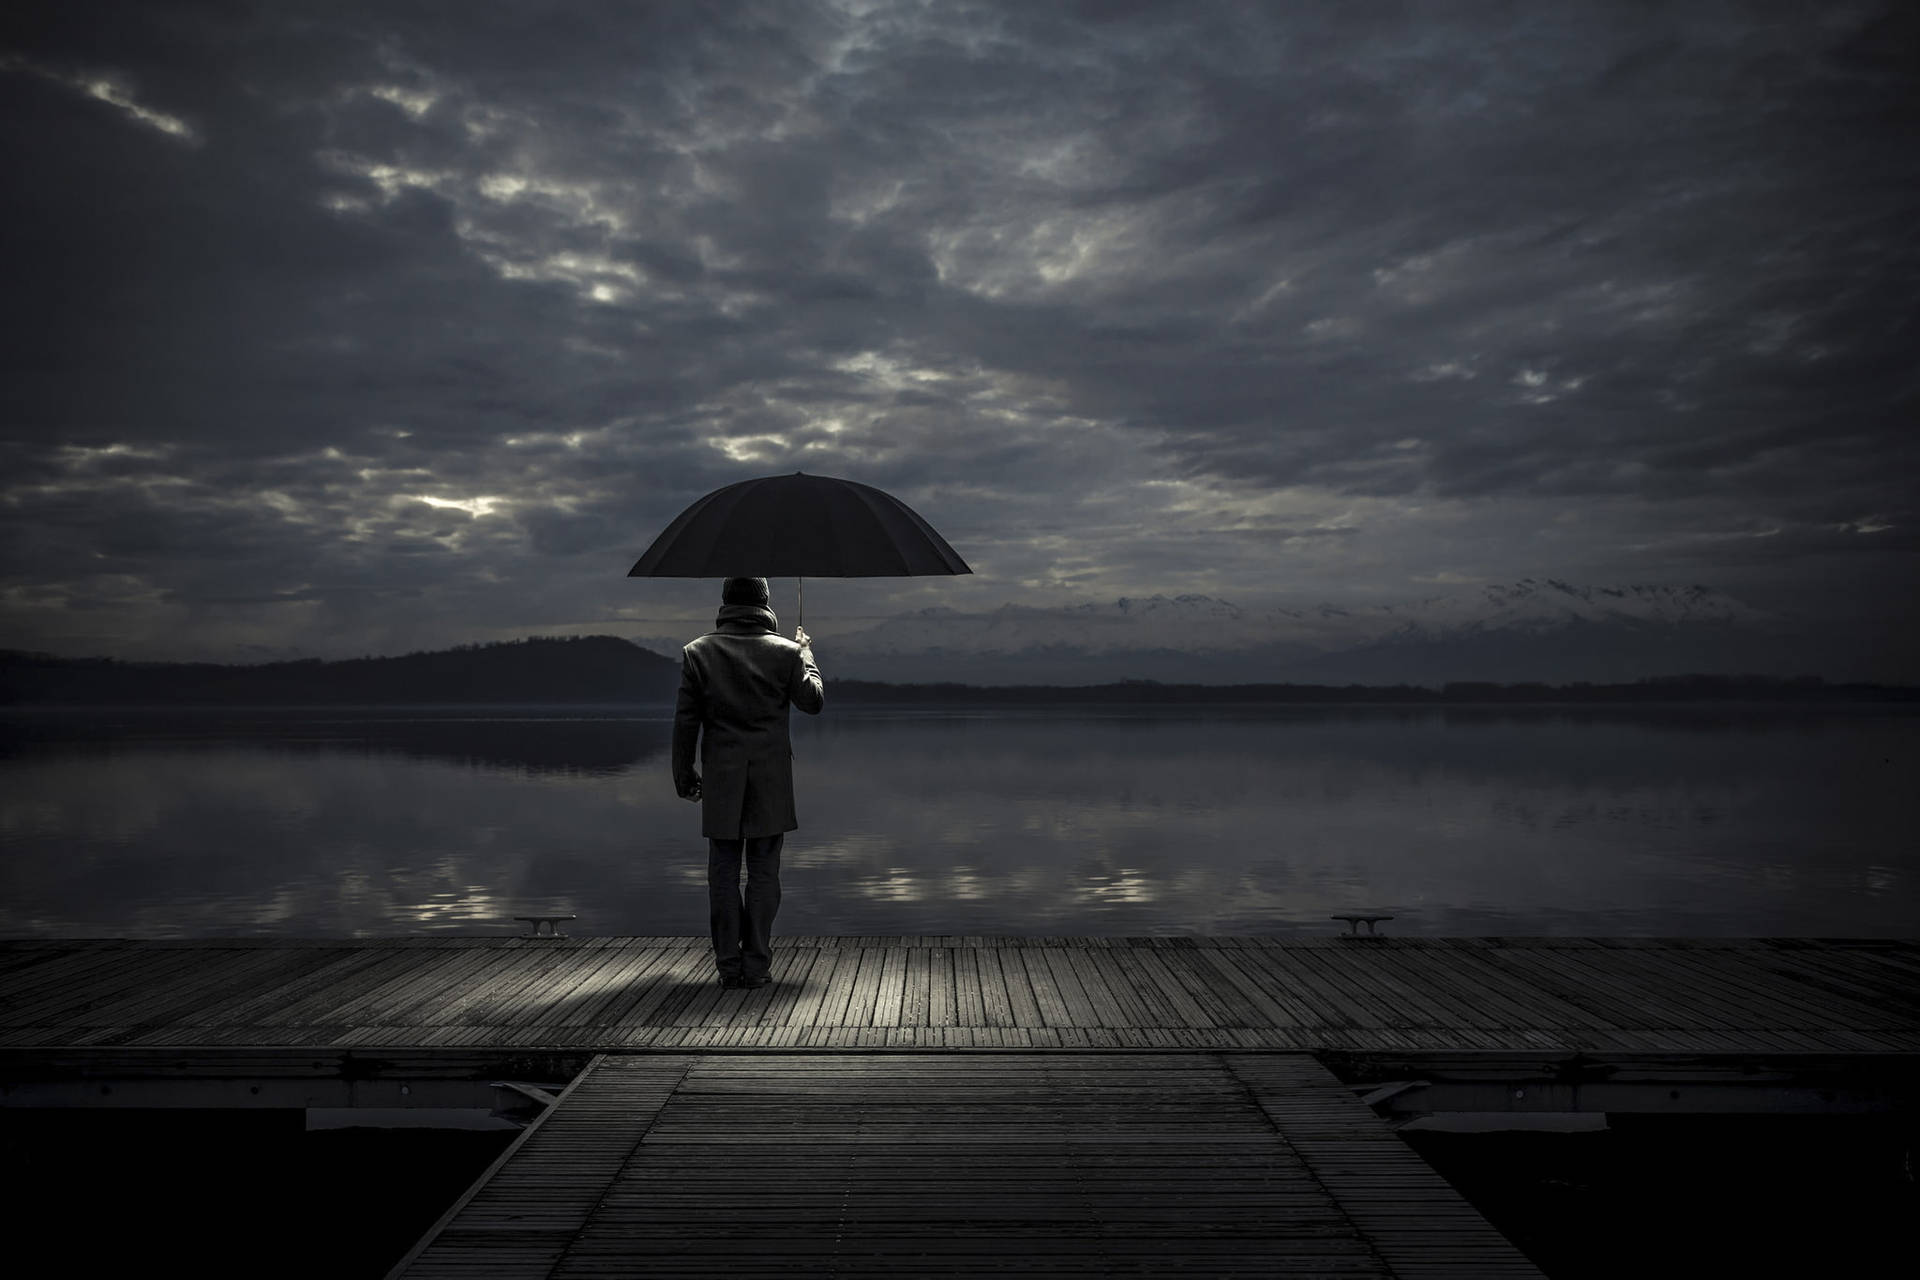 Melancholy Man Reflecting On Life At The Docks